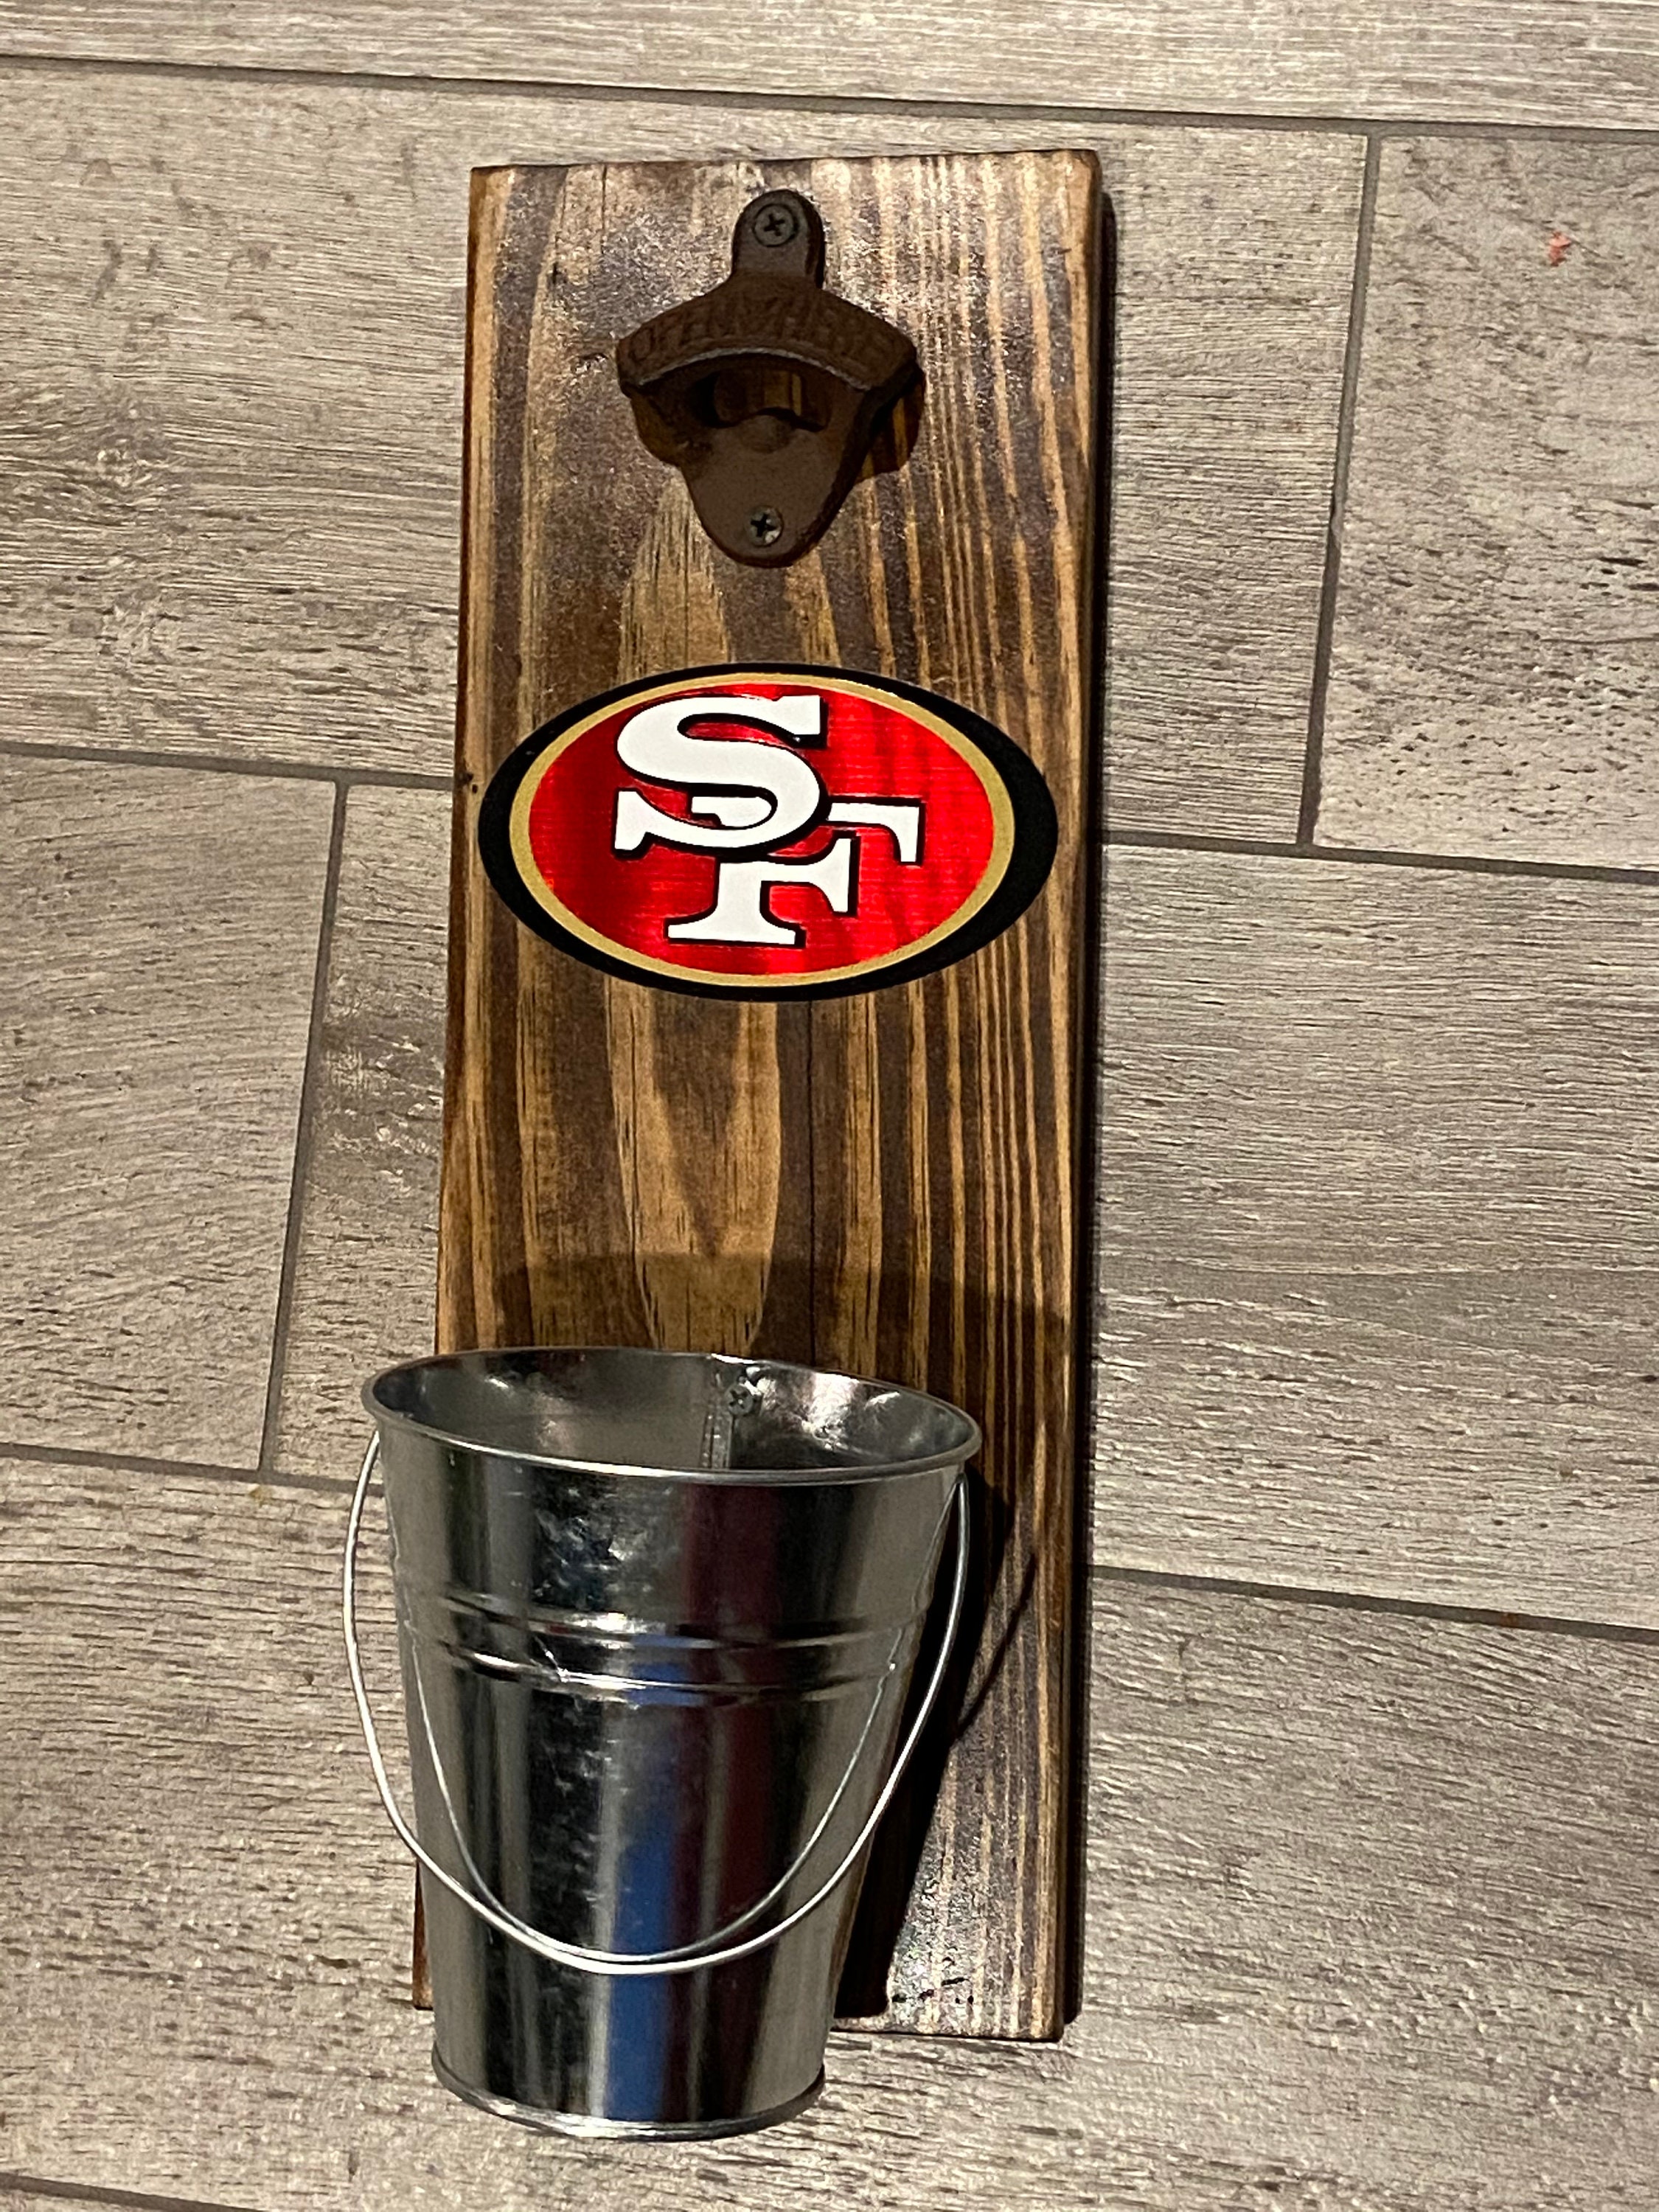  FANMATS 28917 San Francisco 49ers Keychain Bottle Opener :  Sports & Outdoors